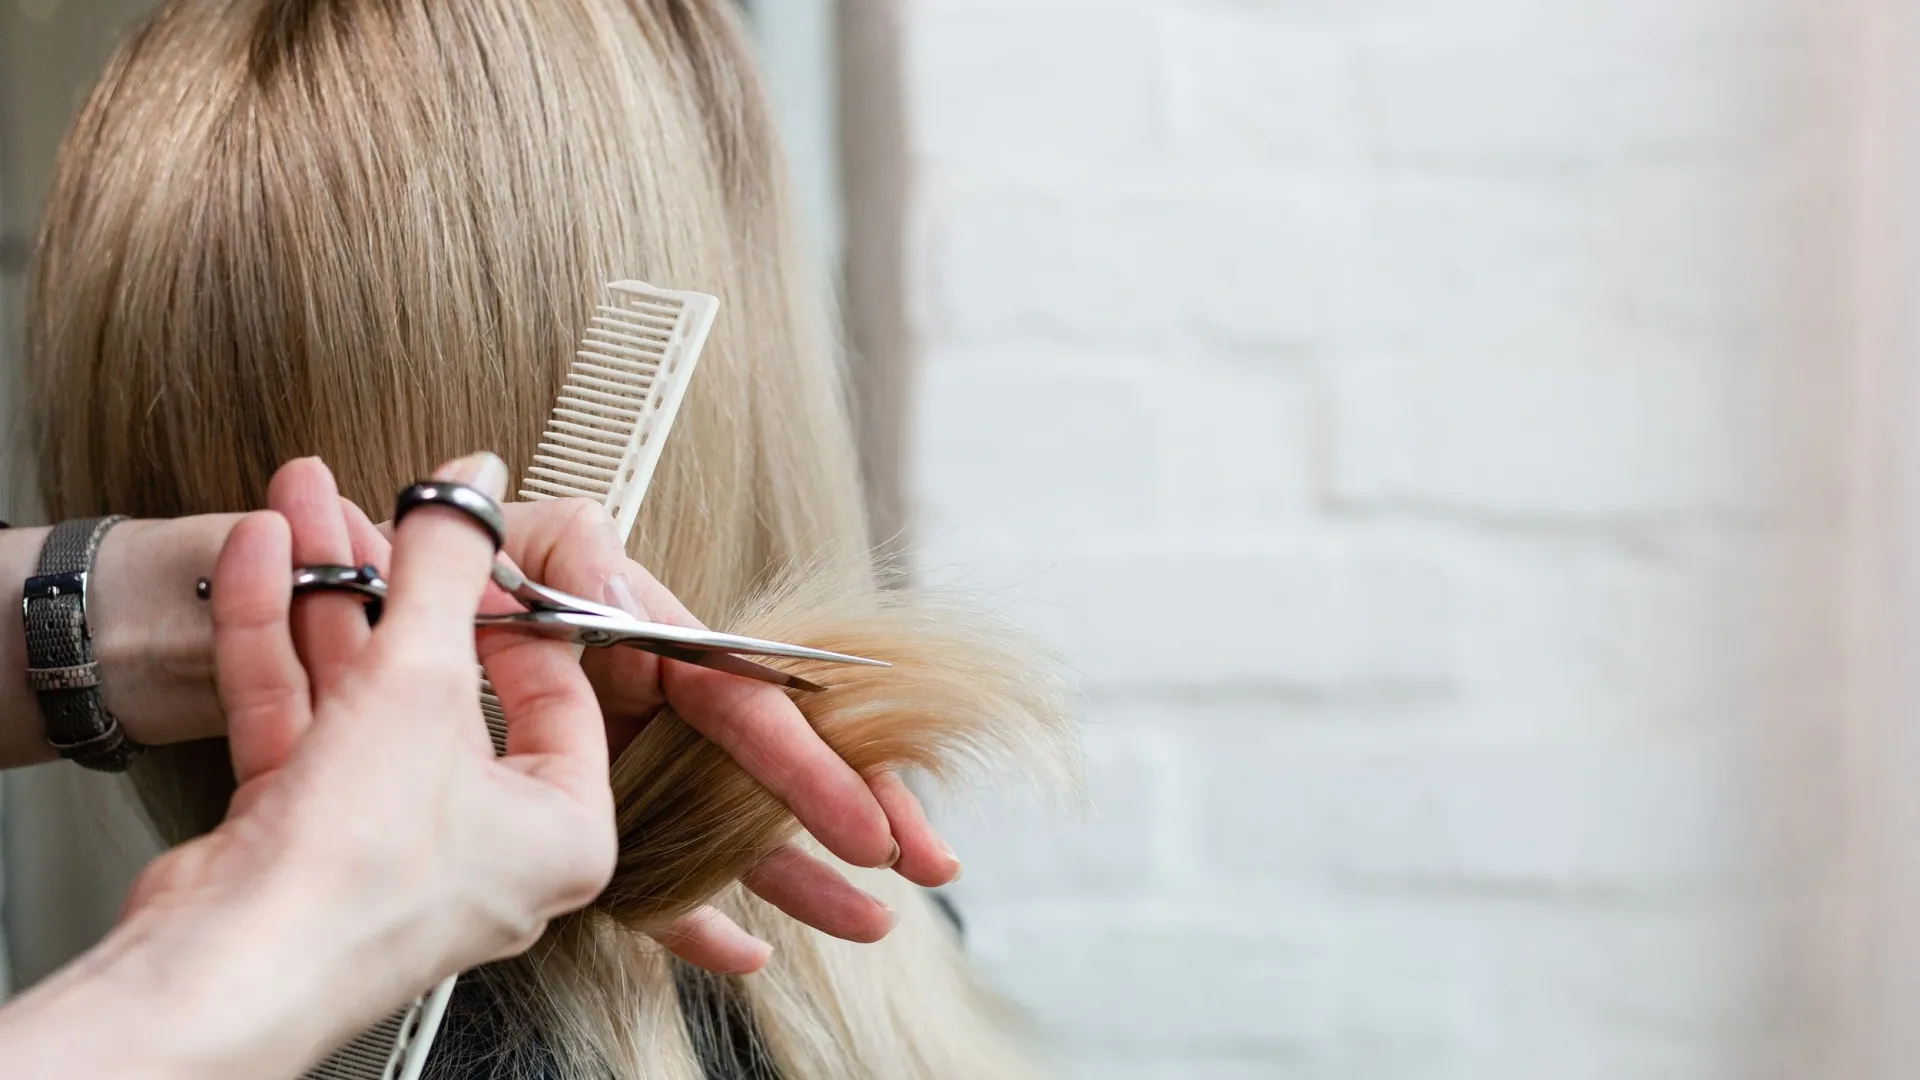 Стрижка волос на время поста тоже под запретом. Фото: beton studio/Shutterstock/Fotodom